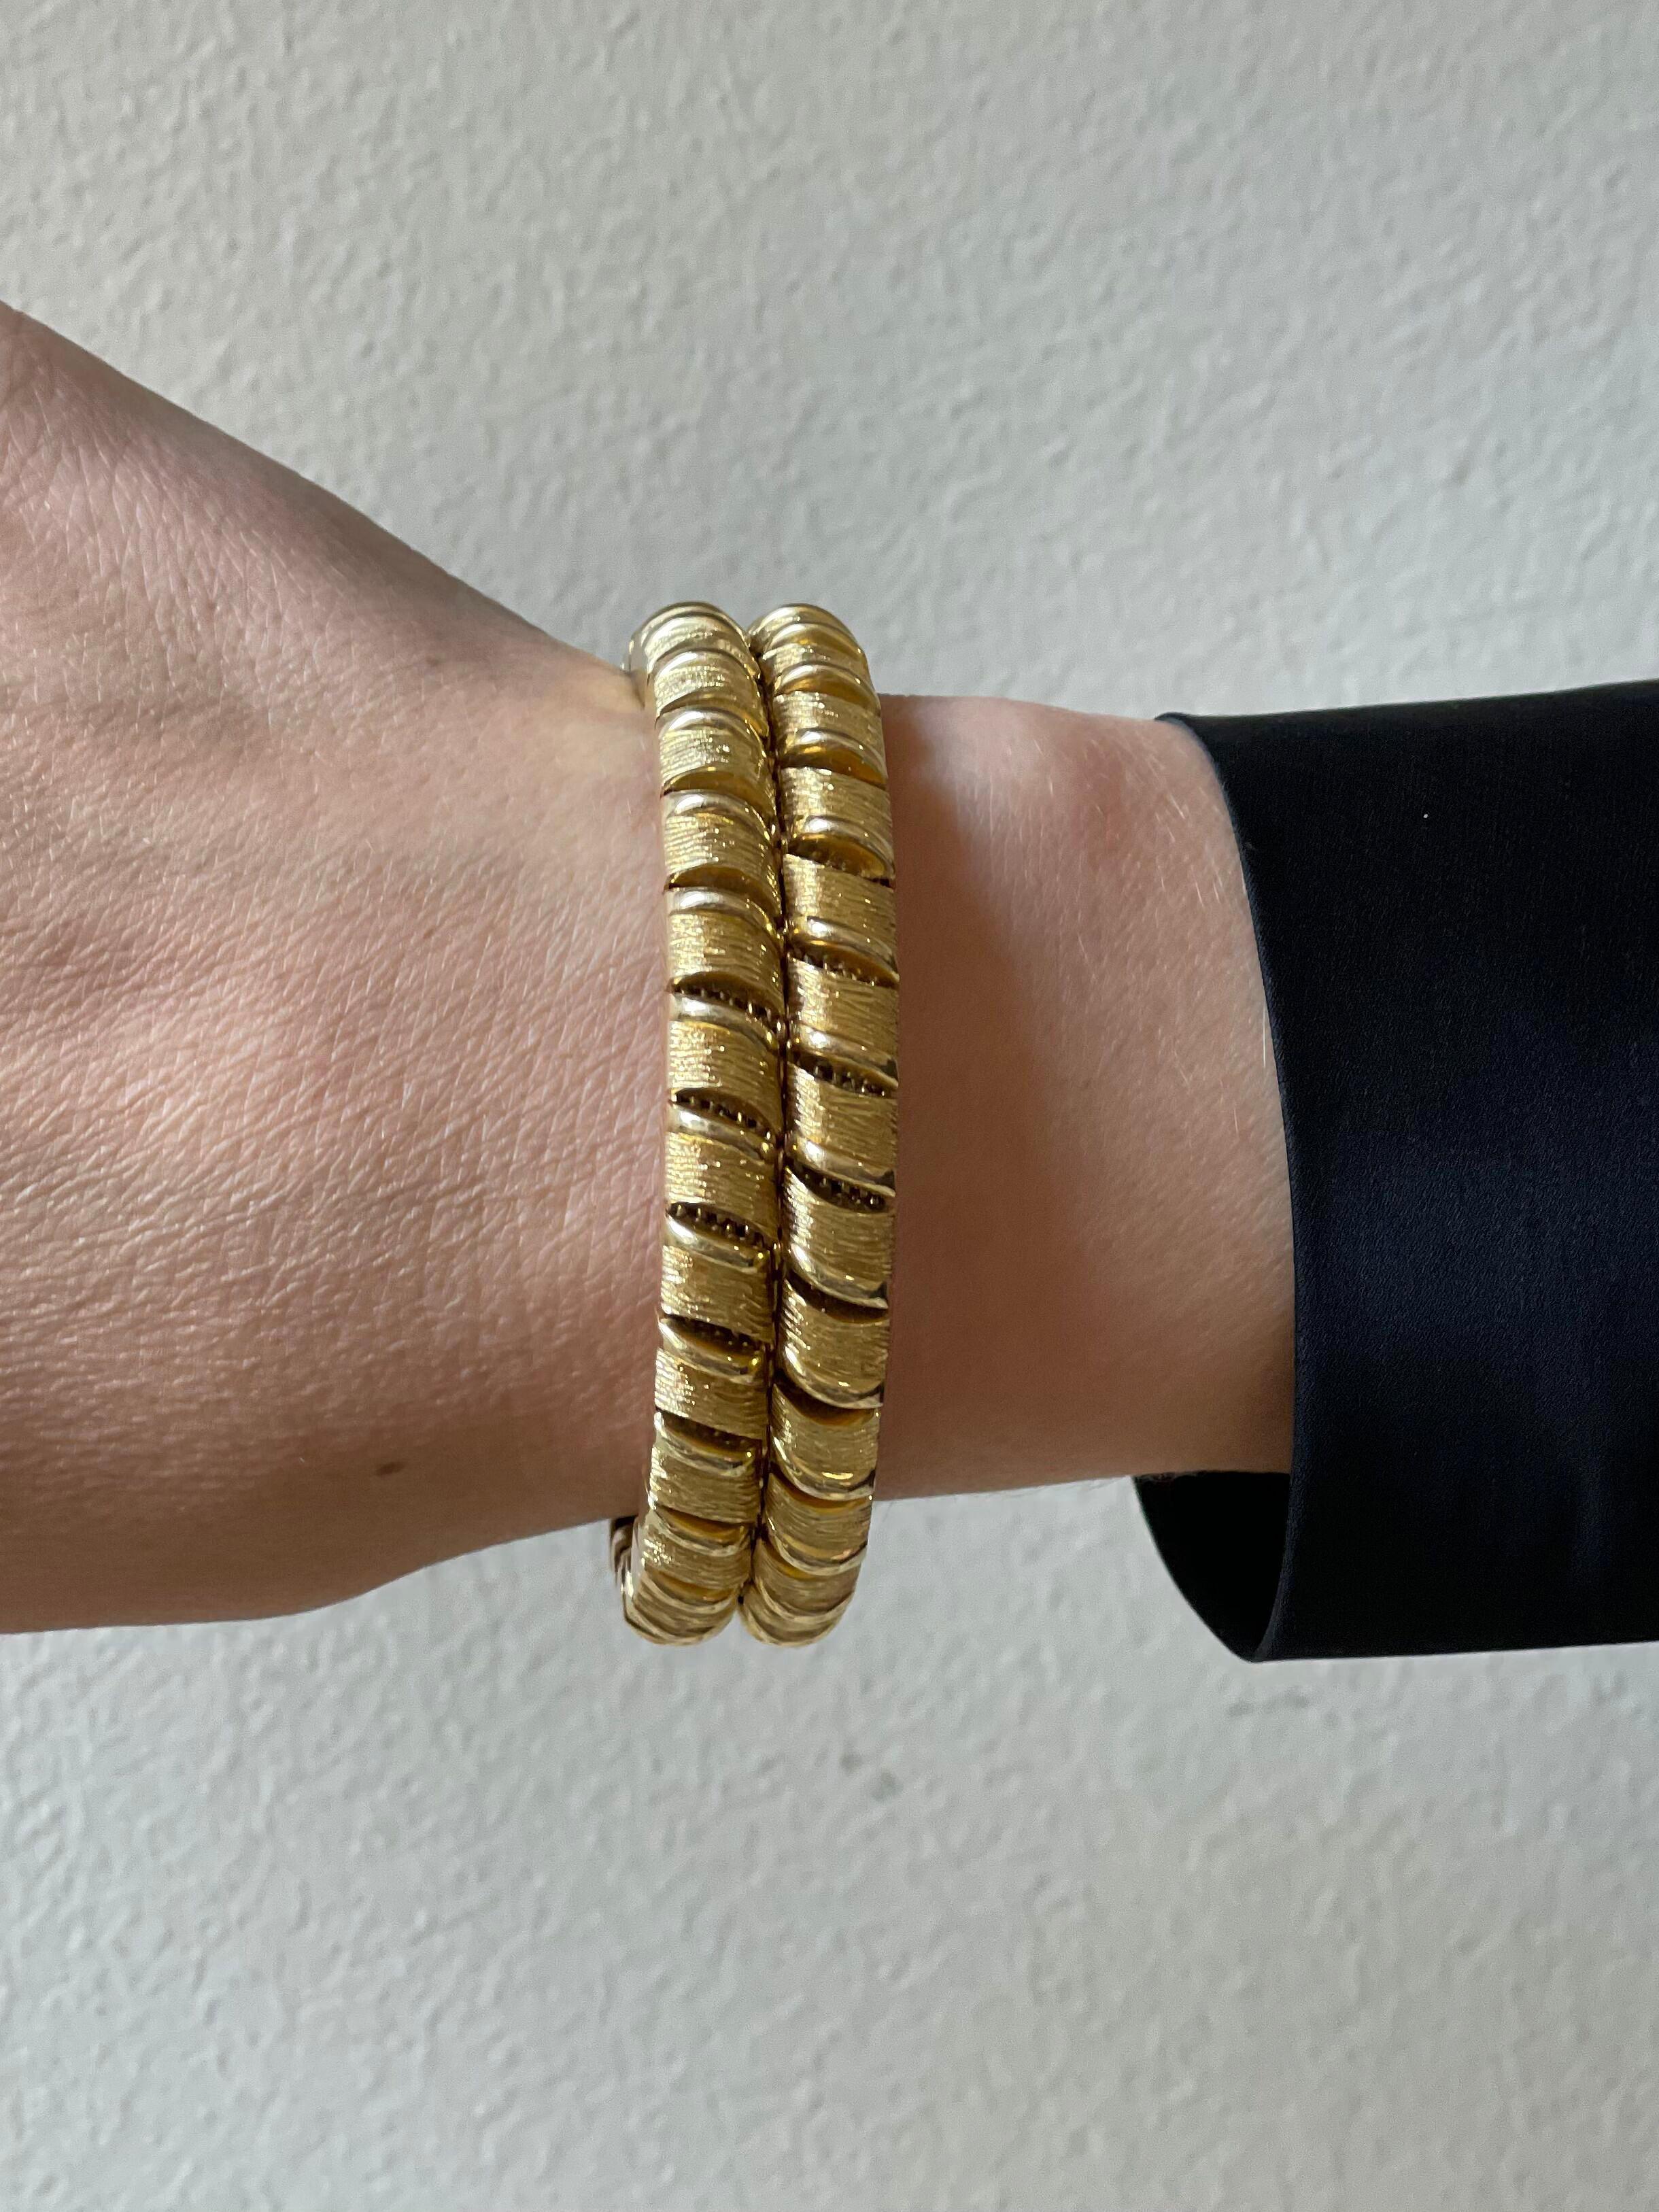 Substantial 18k gold double twisted rope bracelet.  Measuring 7.5